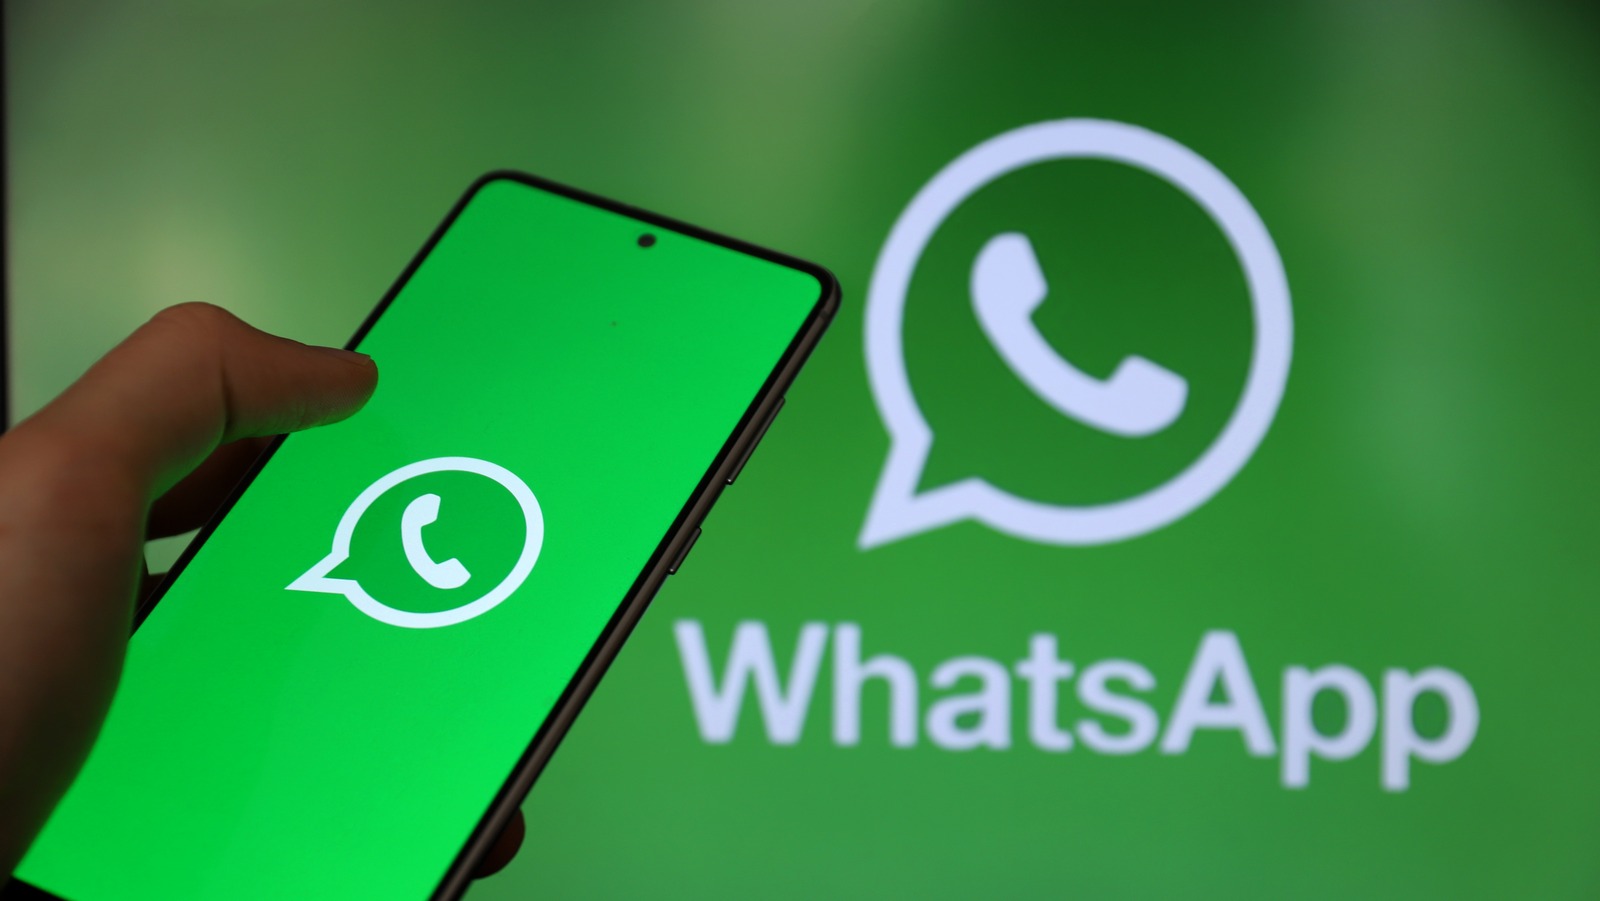 WhatsApp Web Login: Accessing WhatsApp on Your Computer